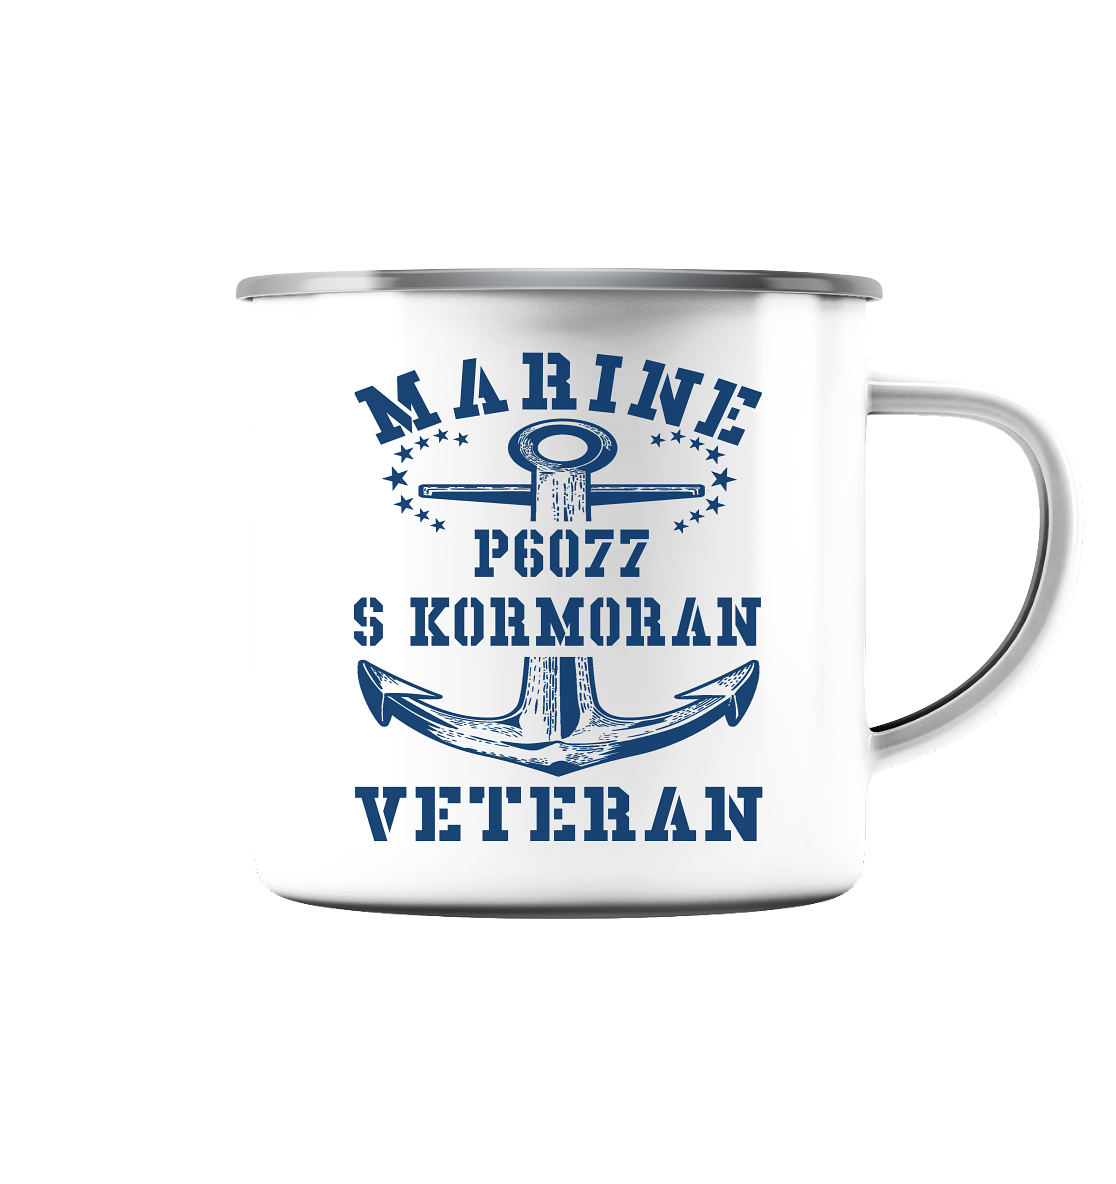 P6077 S KORMORAN Marine Veteran - Emaille Tasse (Silber)